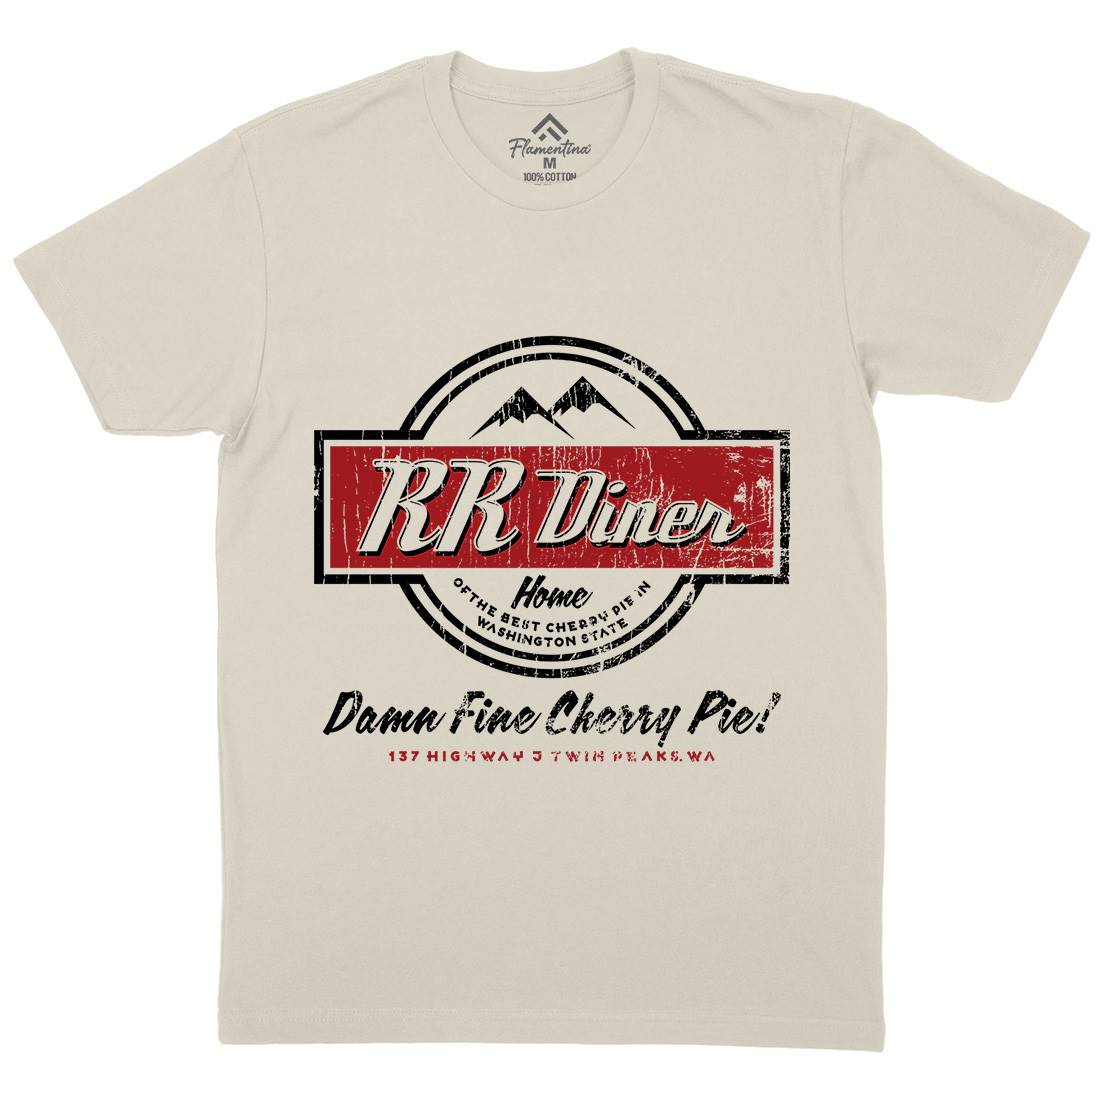 Double Rr Diner Mens Organic Crew Neck T-Shirt Horror D335